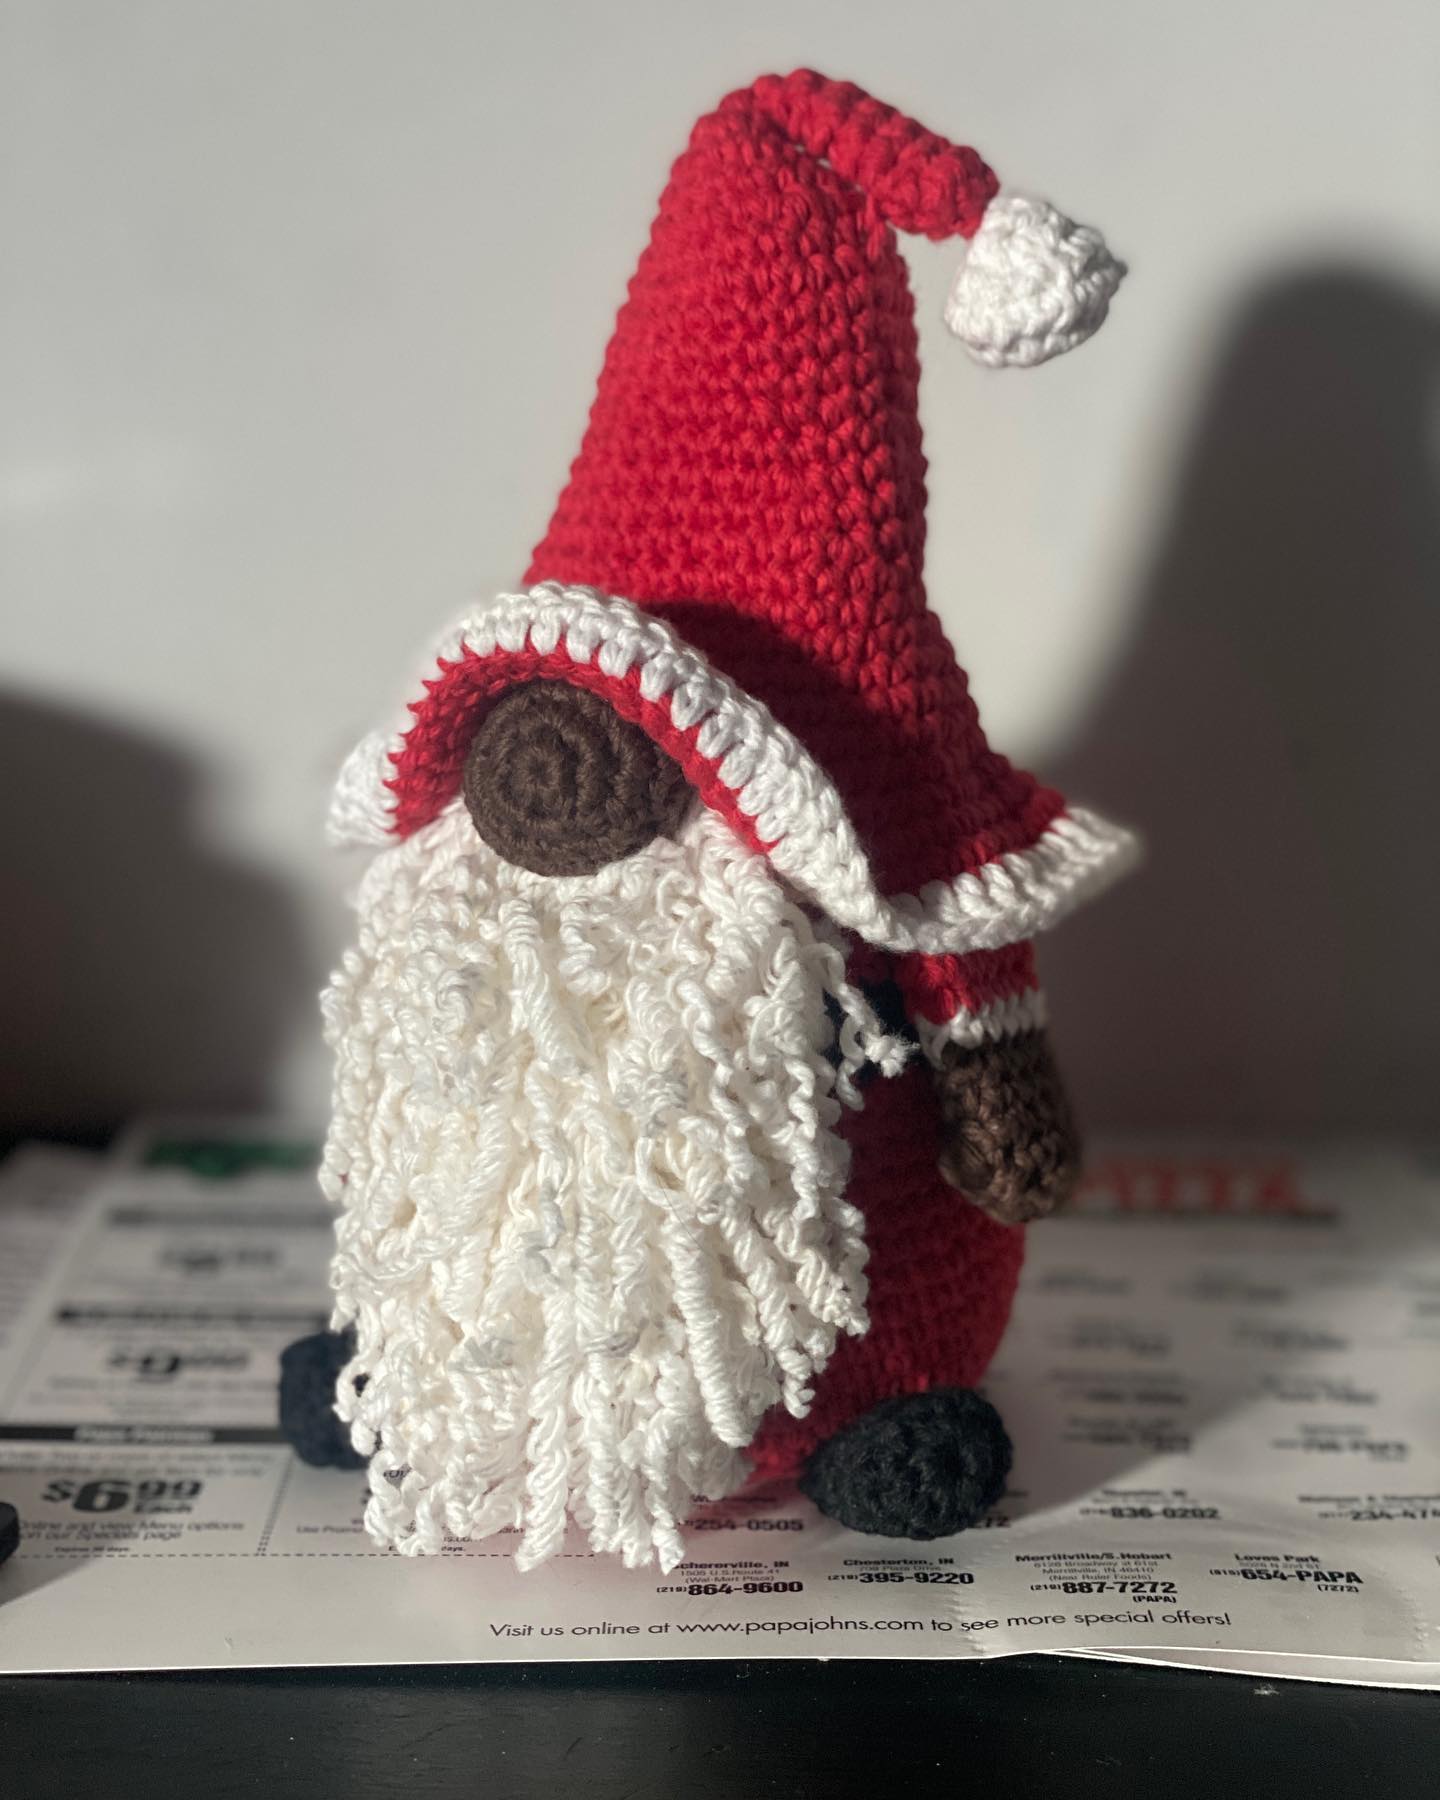 #brownsanta #gnome #crochet #homemade #artist #hooker #hehe #bettyboobs